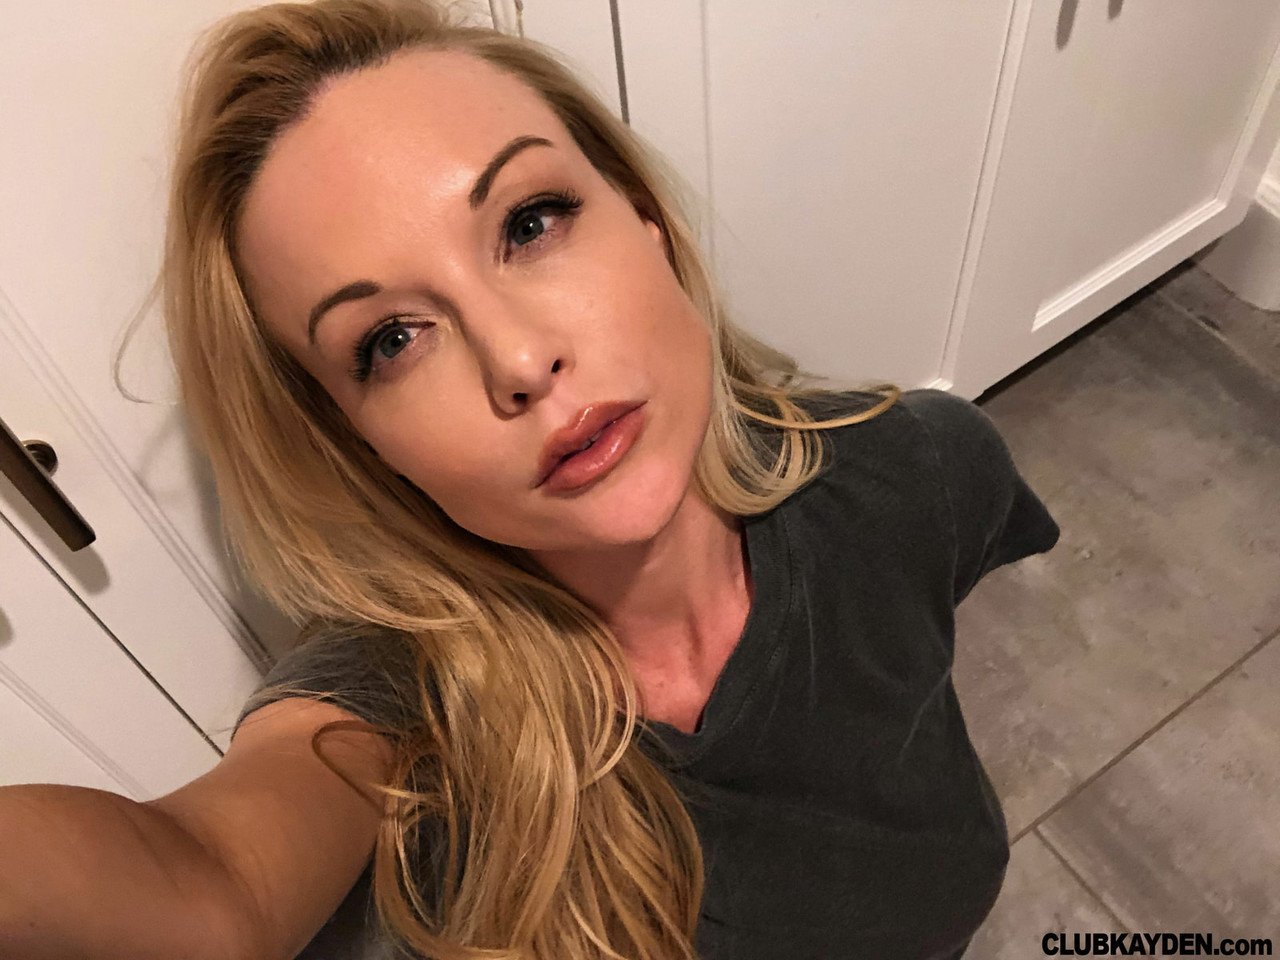 Hot blond Kayden Kross sports long nipples while taking masturbation selfies photo porno #422676185